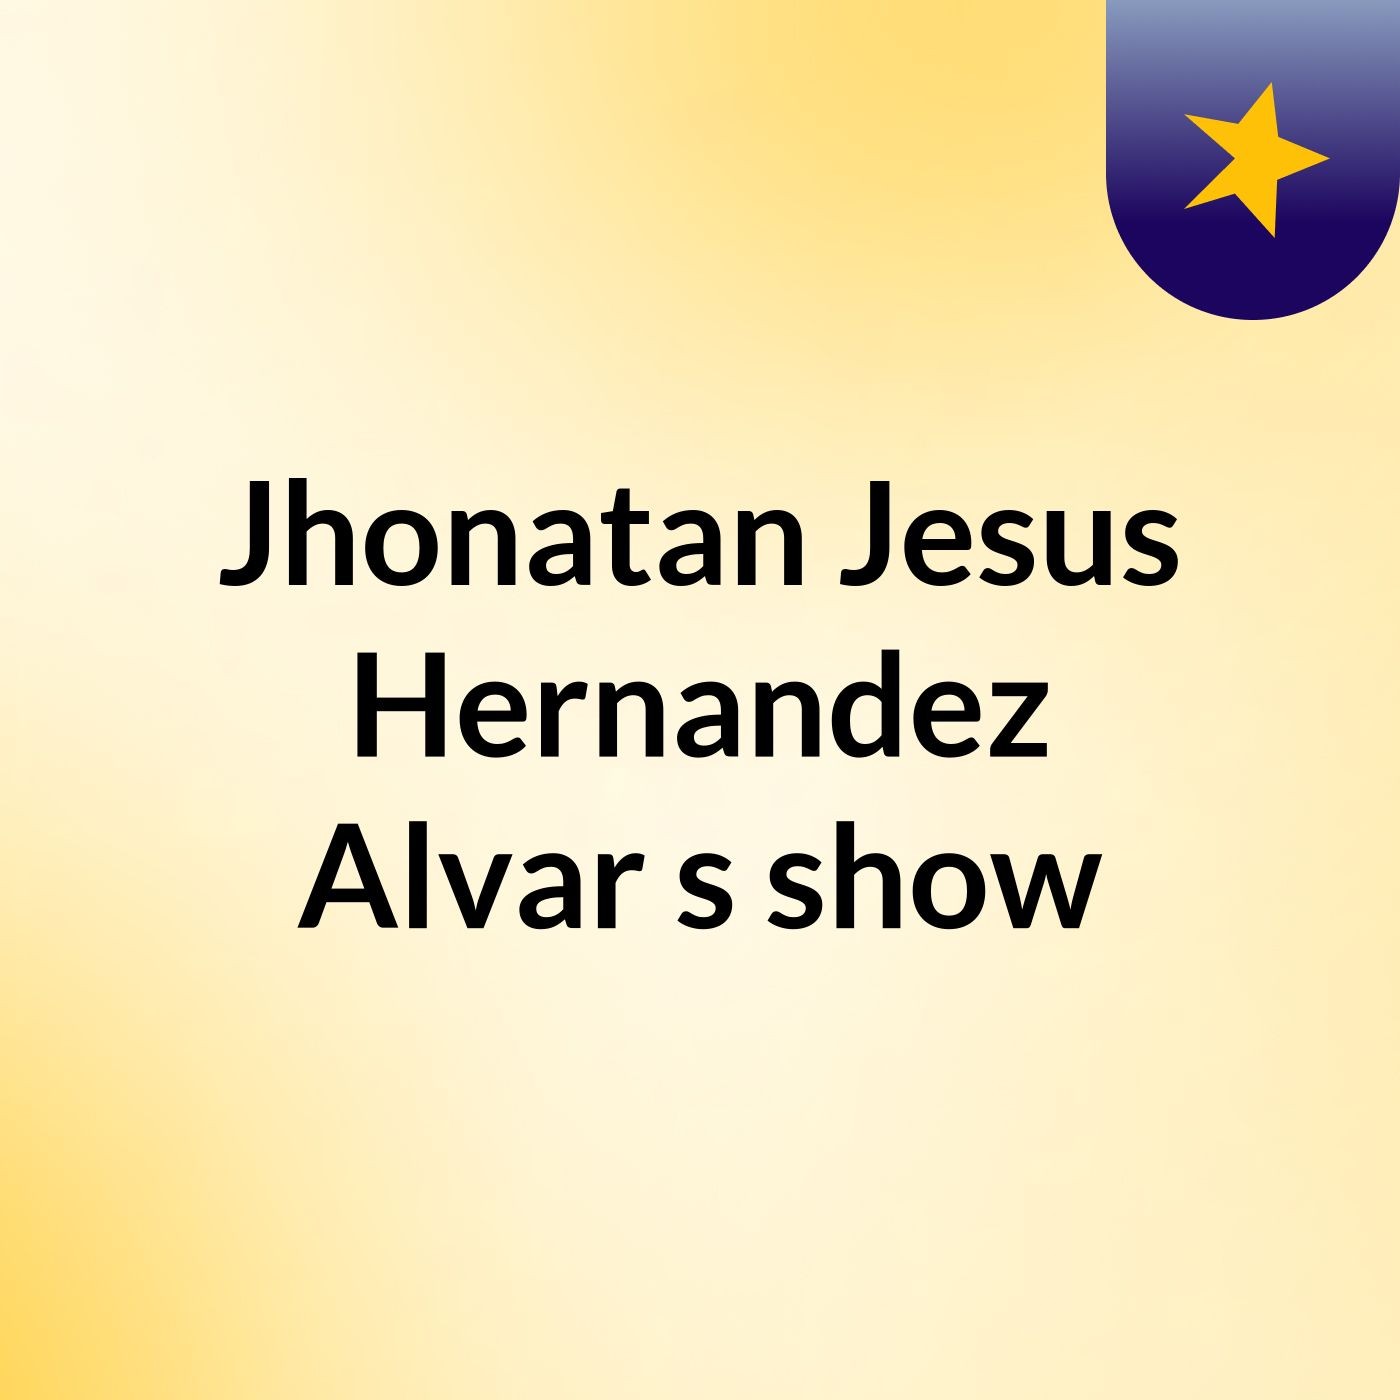 Jhonatan Jesus Hernandez Alvar's show